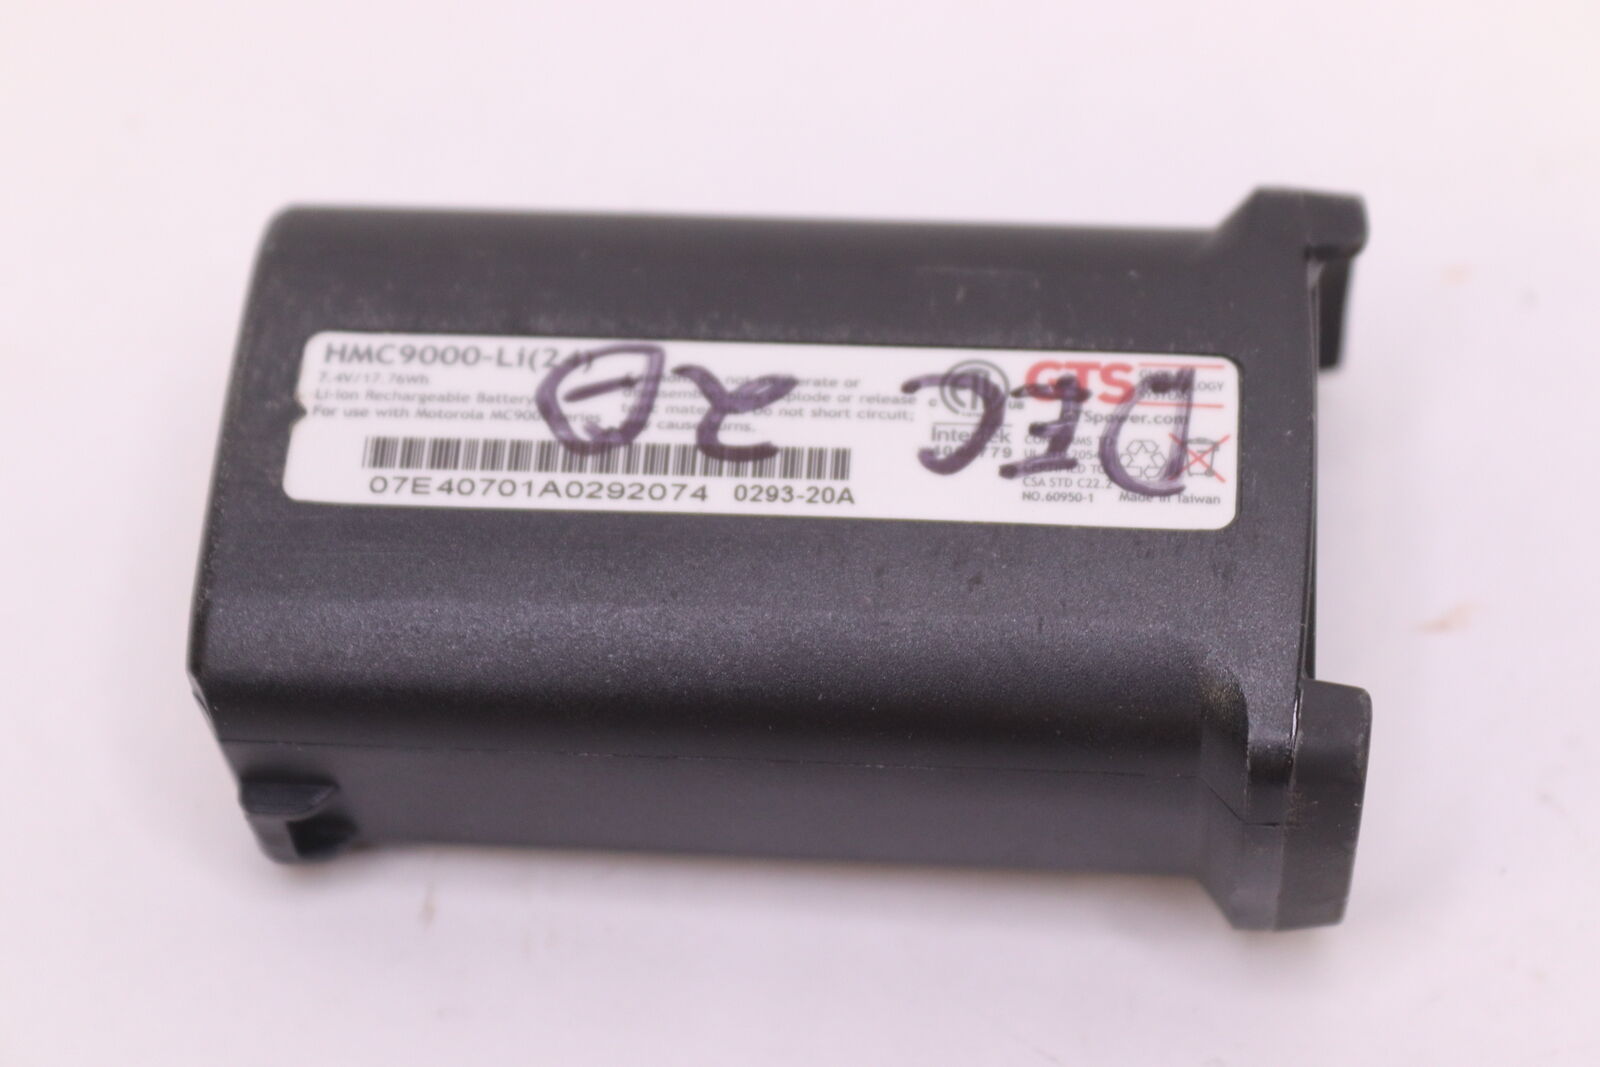 GTS Replacement Battery for Motorola Scanners 2400 mAh LiIon 7.4V HMC9000-LI(24)